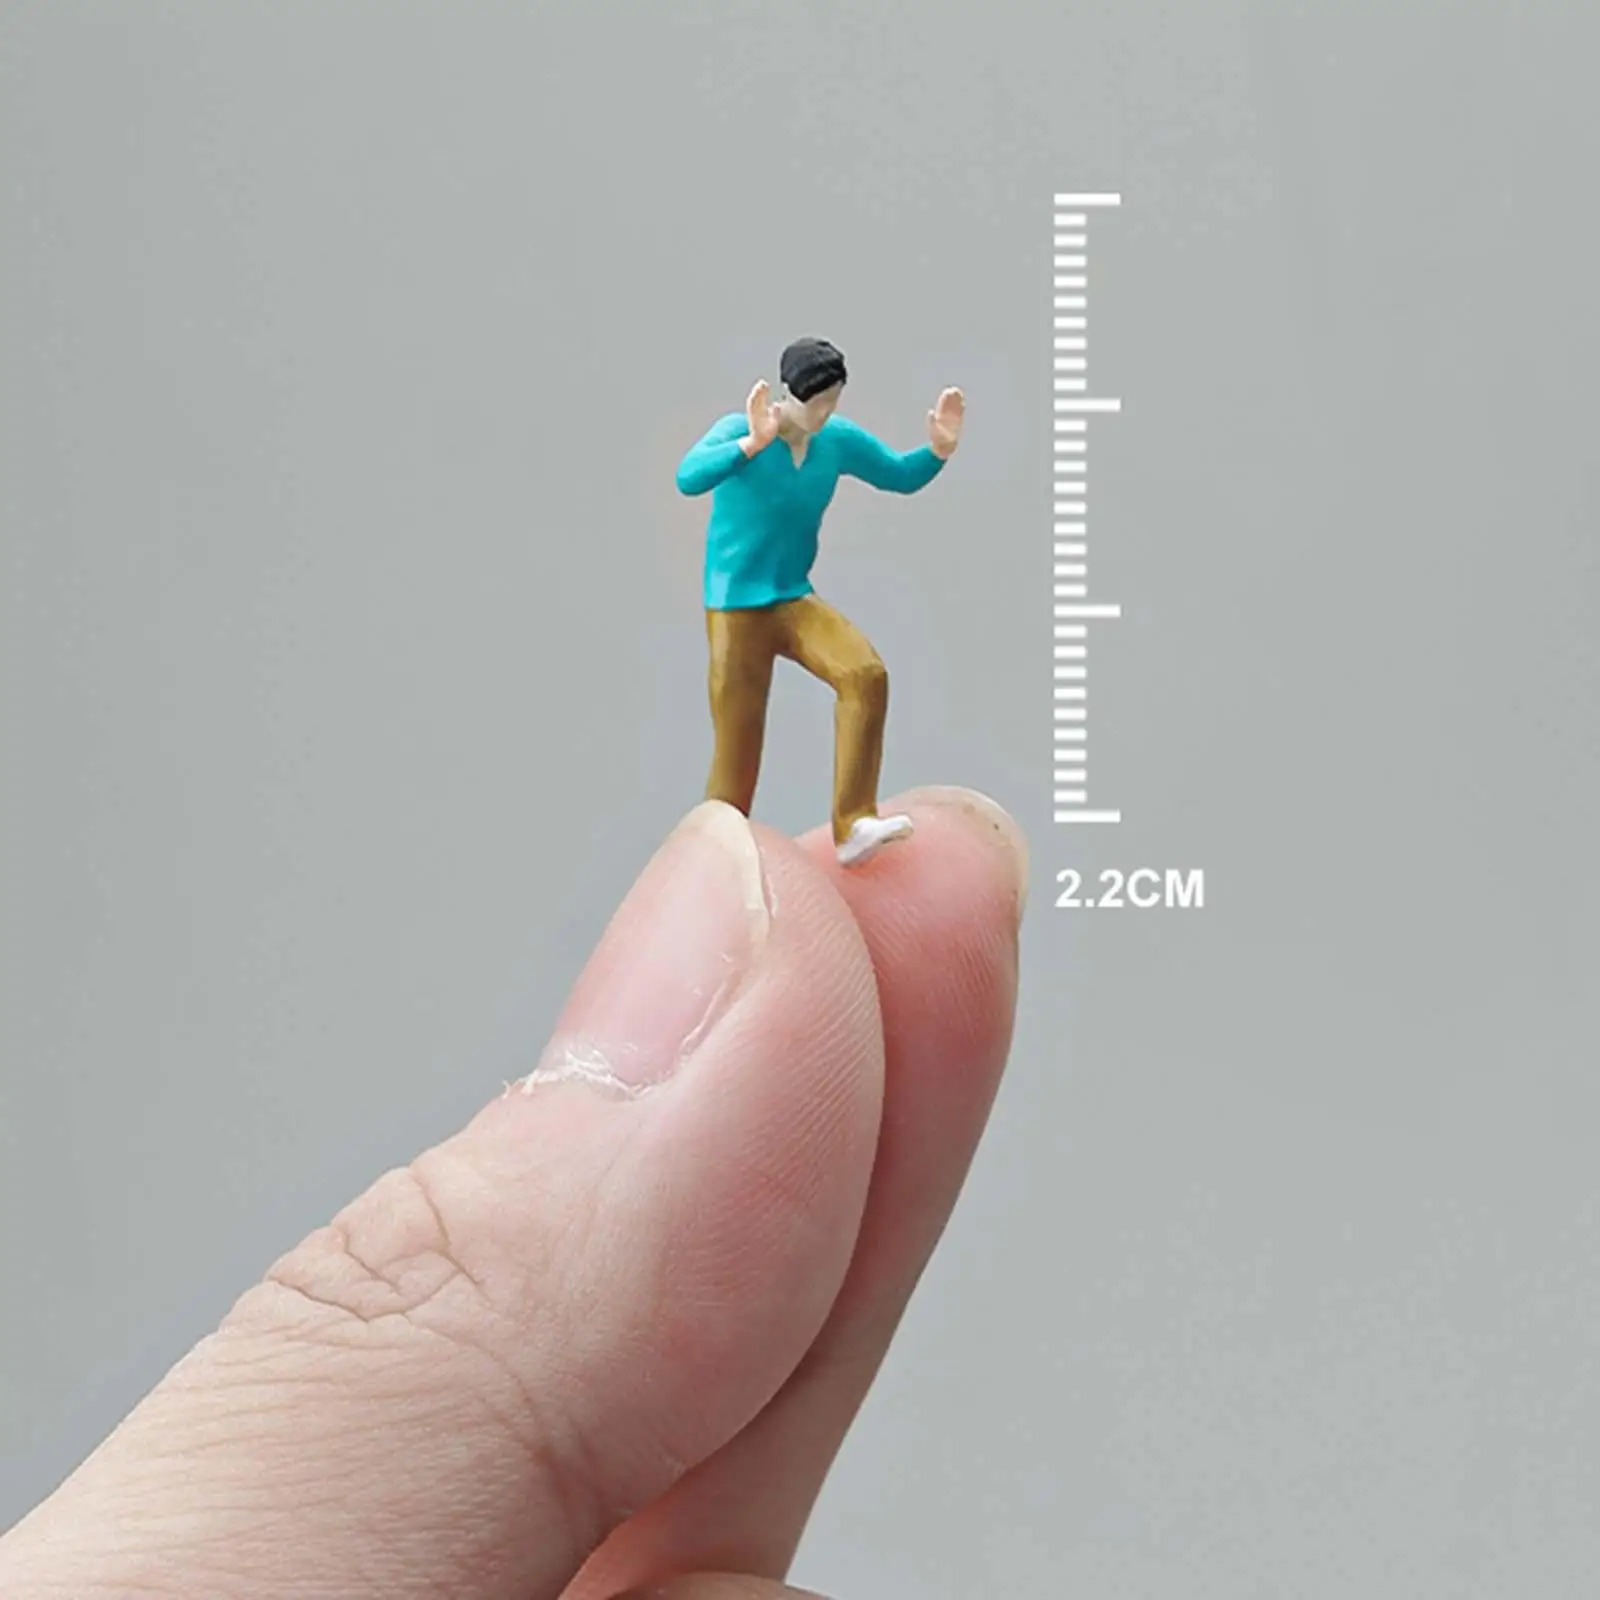 1/64 Miniature Model Figures Trains Architectural Painted Figures Realistic Figures Resin Figures Miniature Scenes Decor